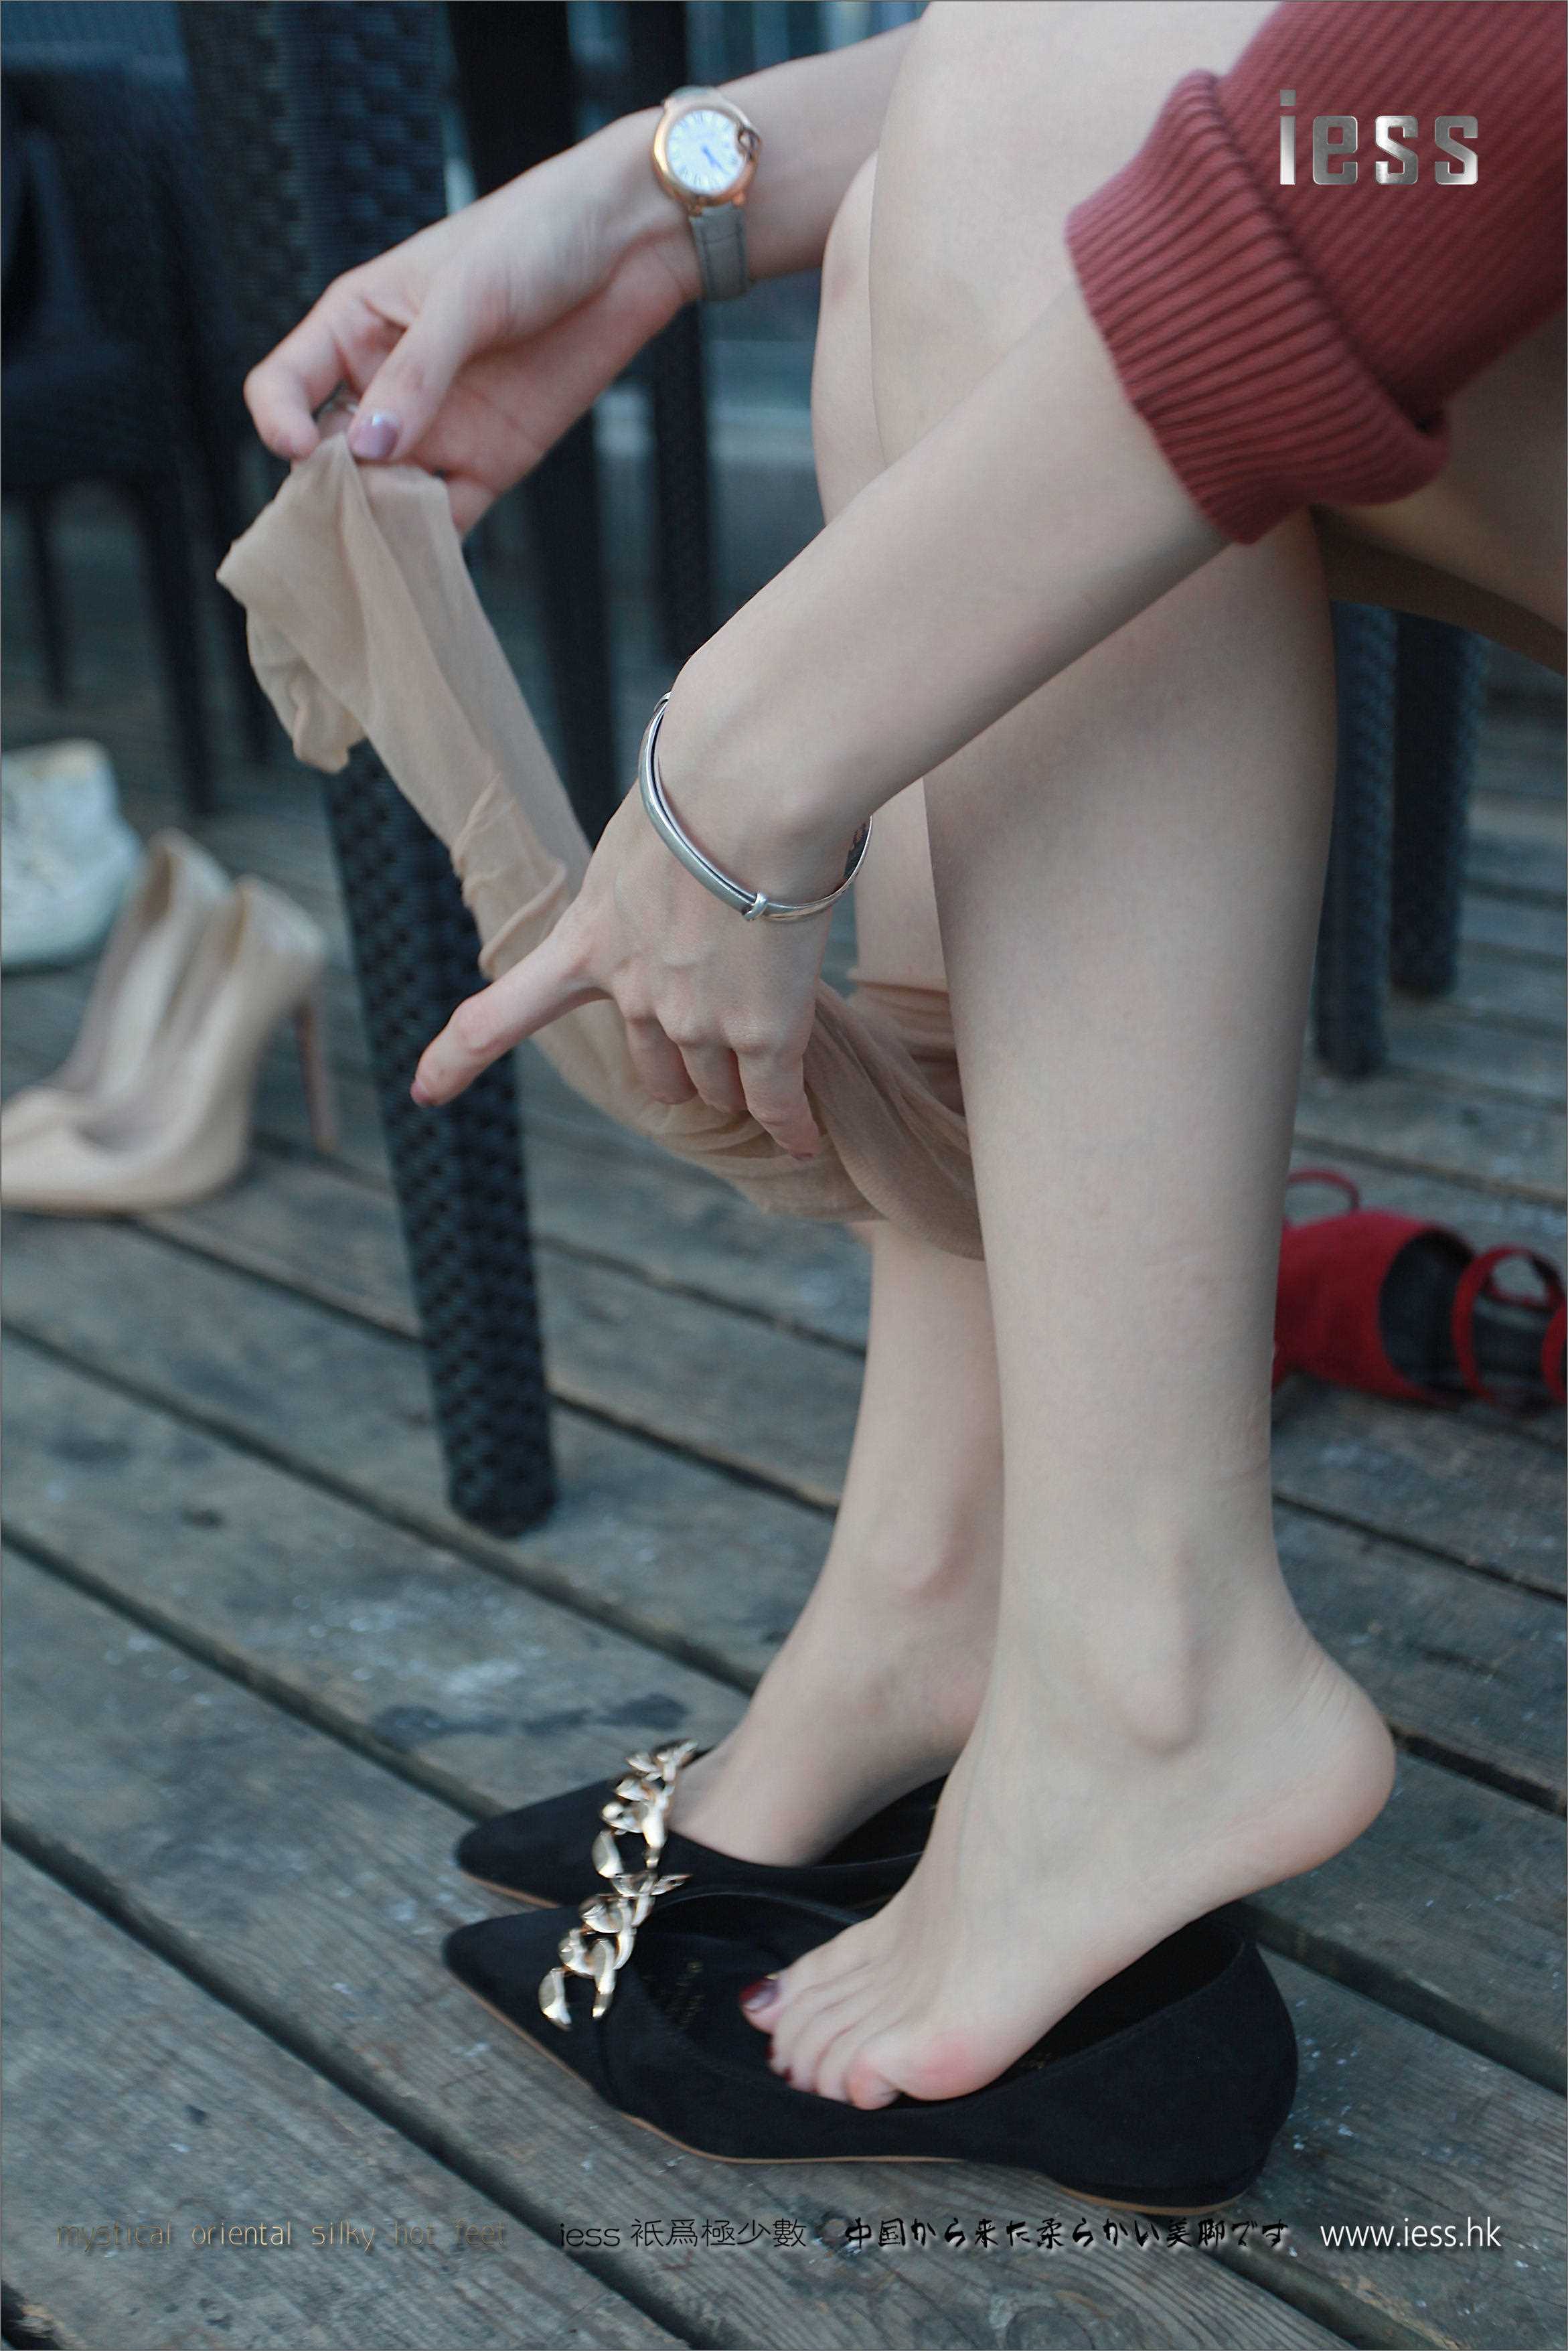 China Beauty Legs and feet 178